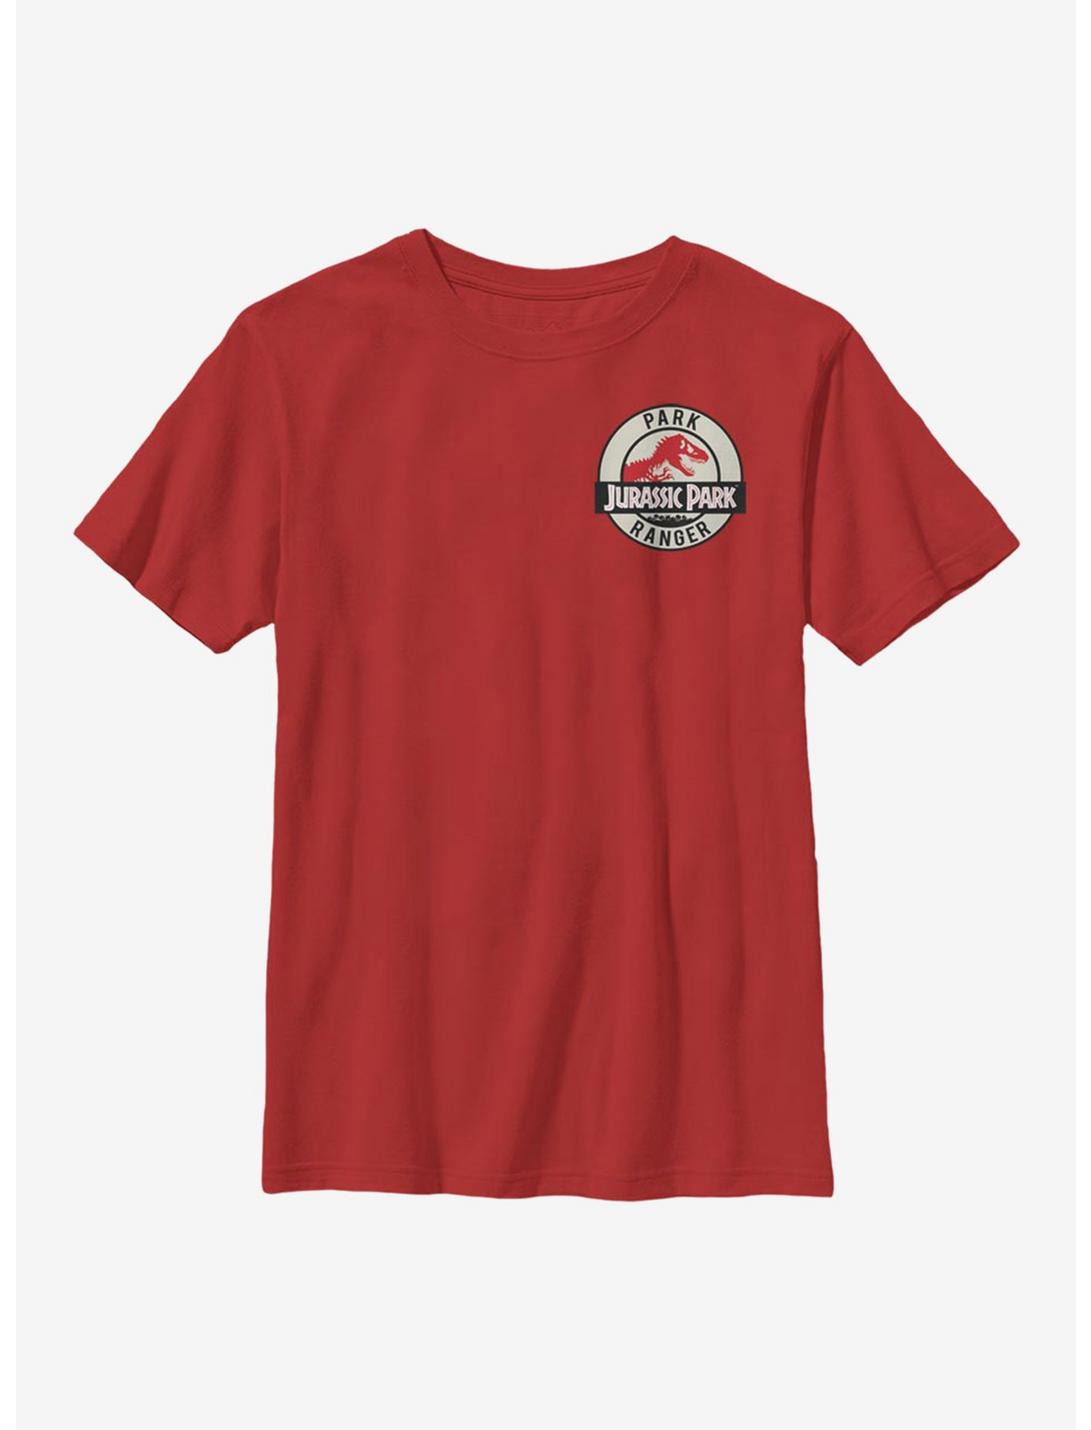 Jurassic Park Park Ranger Tan Badge Youth T-Shirt, RED, hi-res